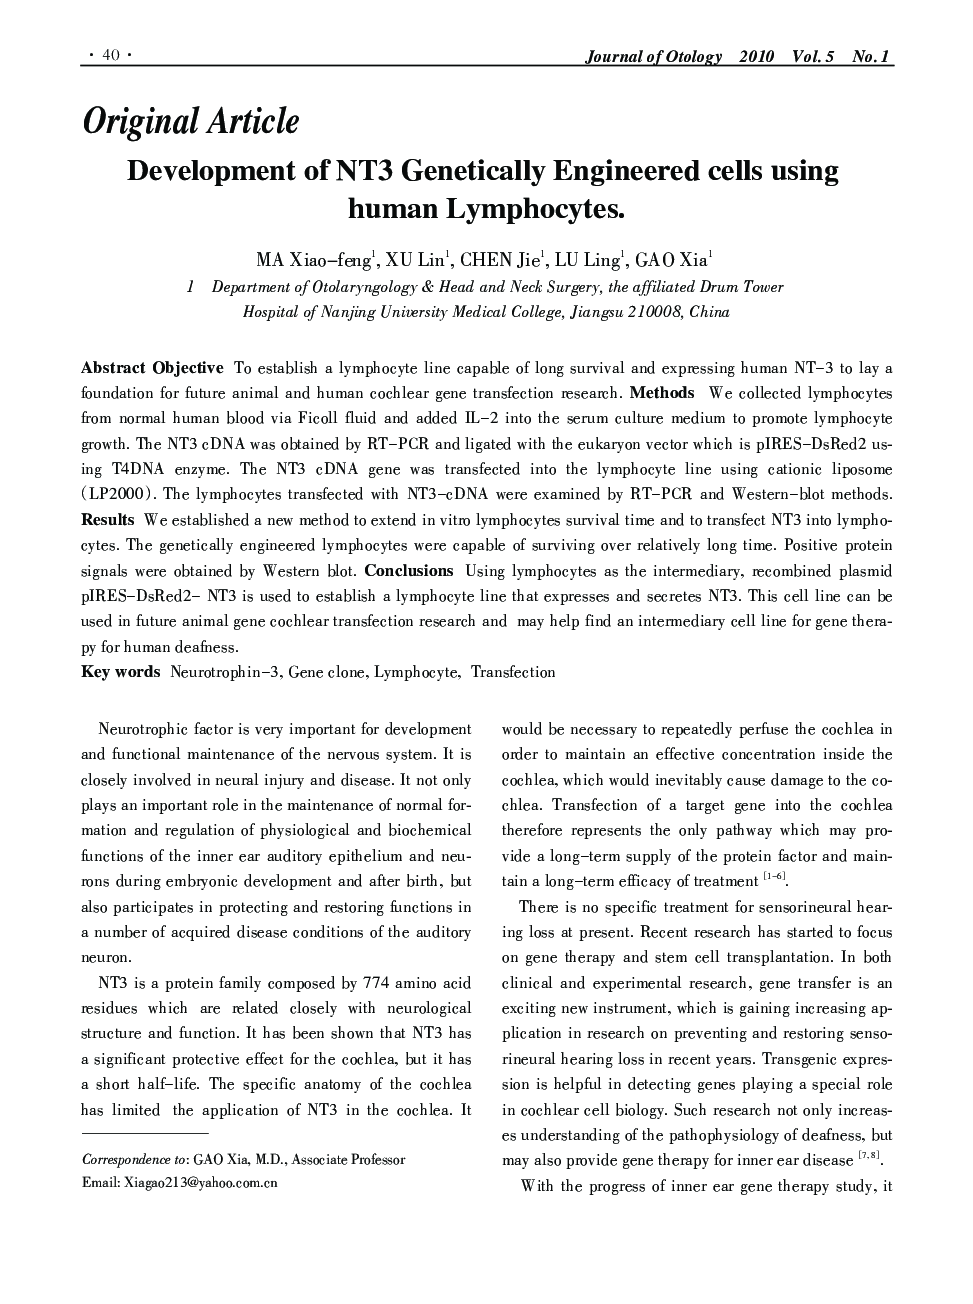 Development of NT3 Genetically Engineered cells using human Lymphocytes.